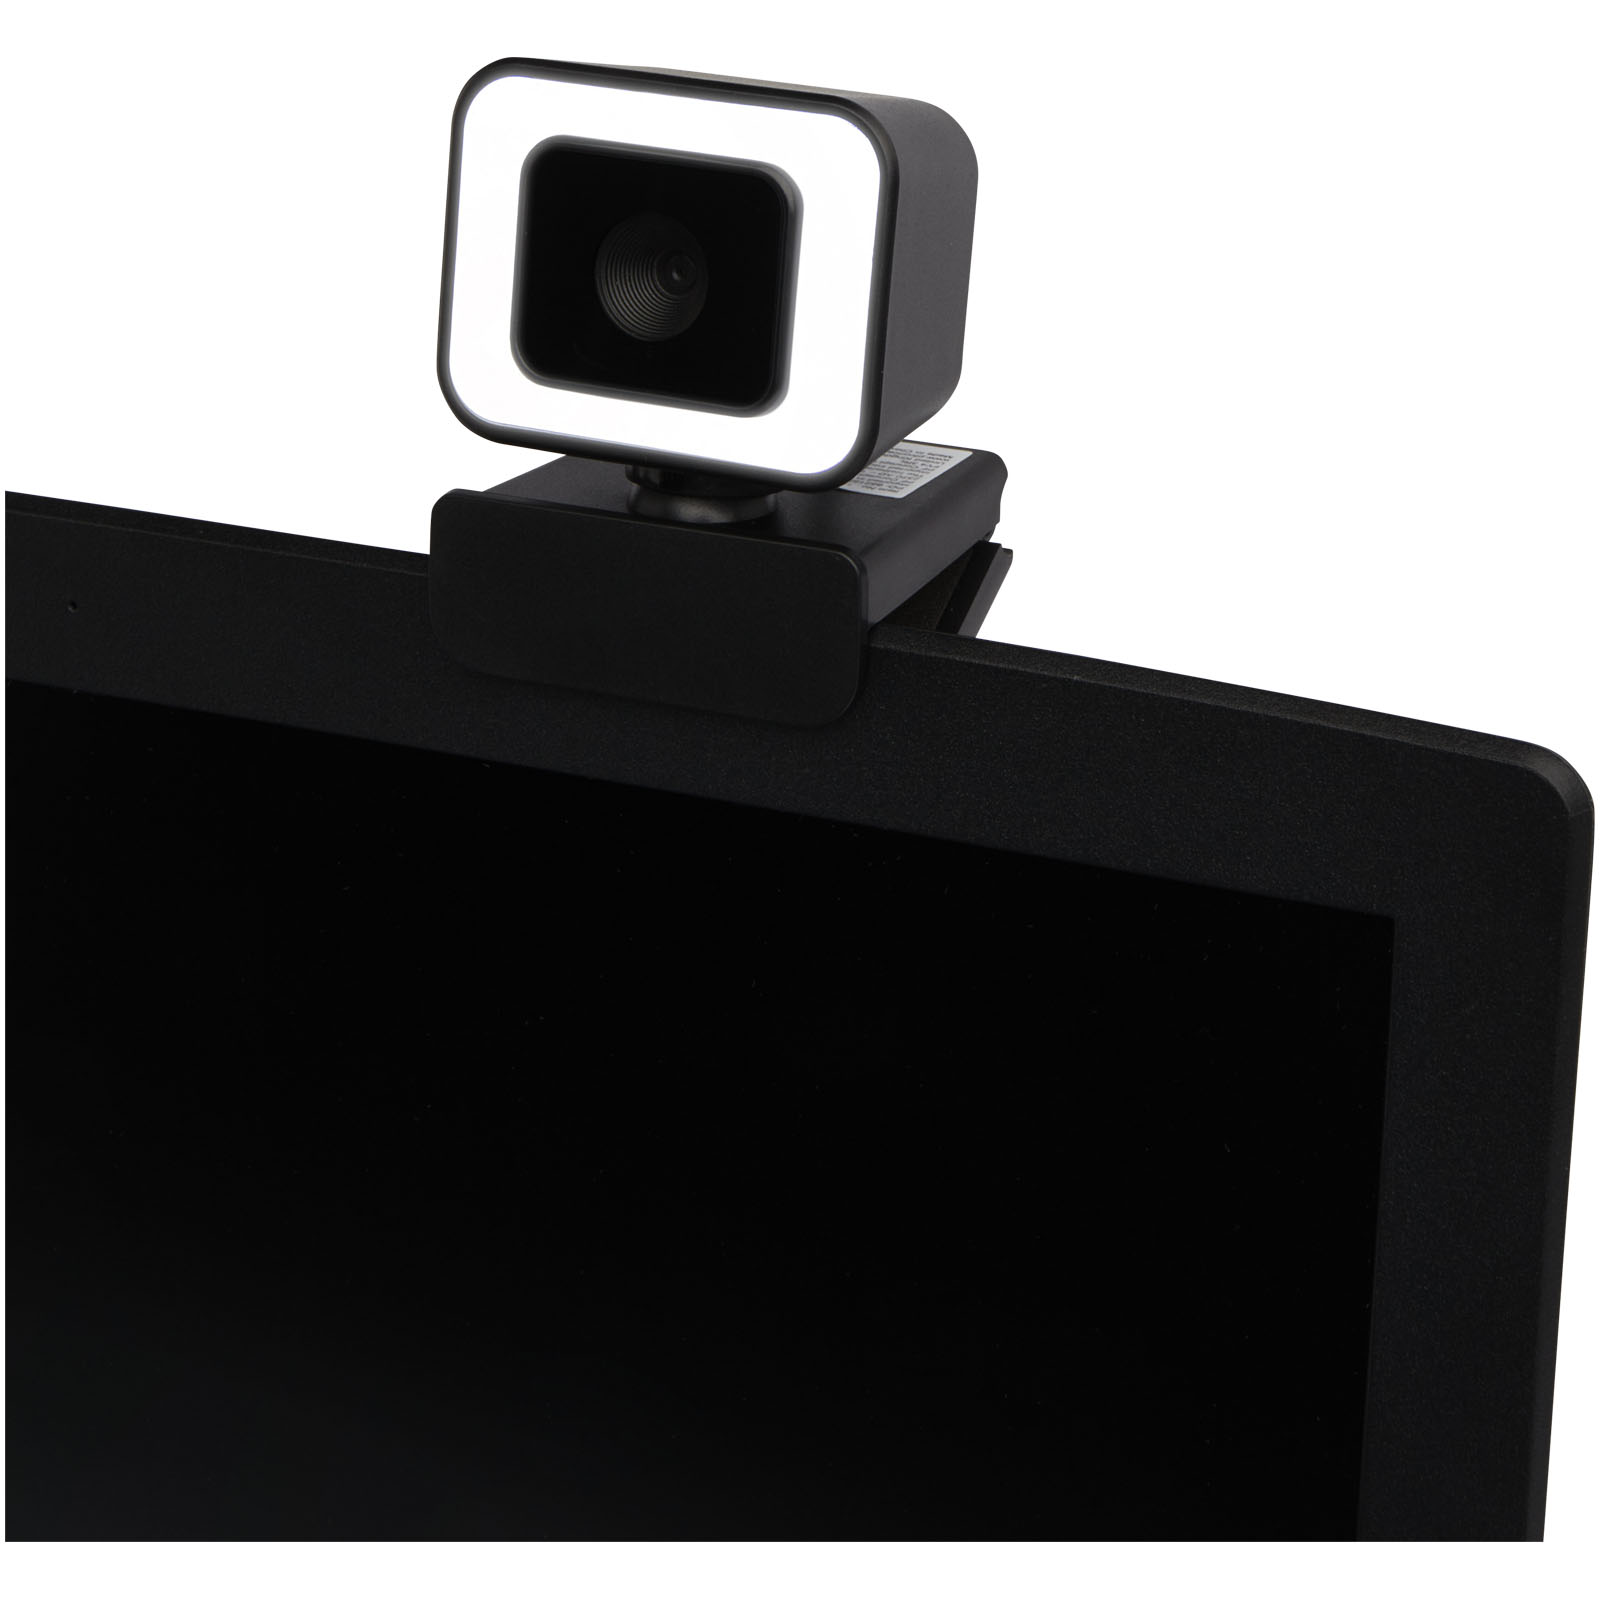 Advertising Computer Accessories - Hybrid webcam - 3